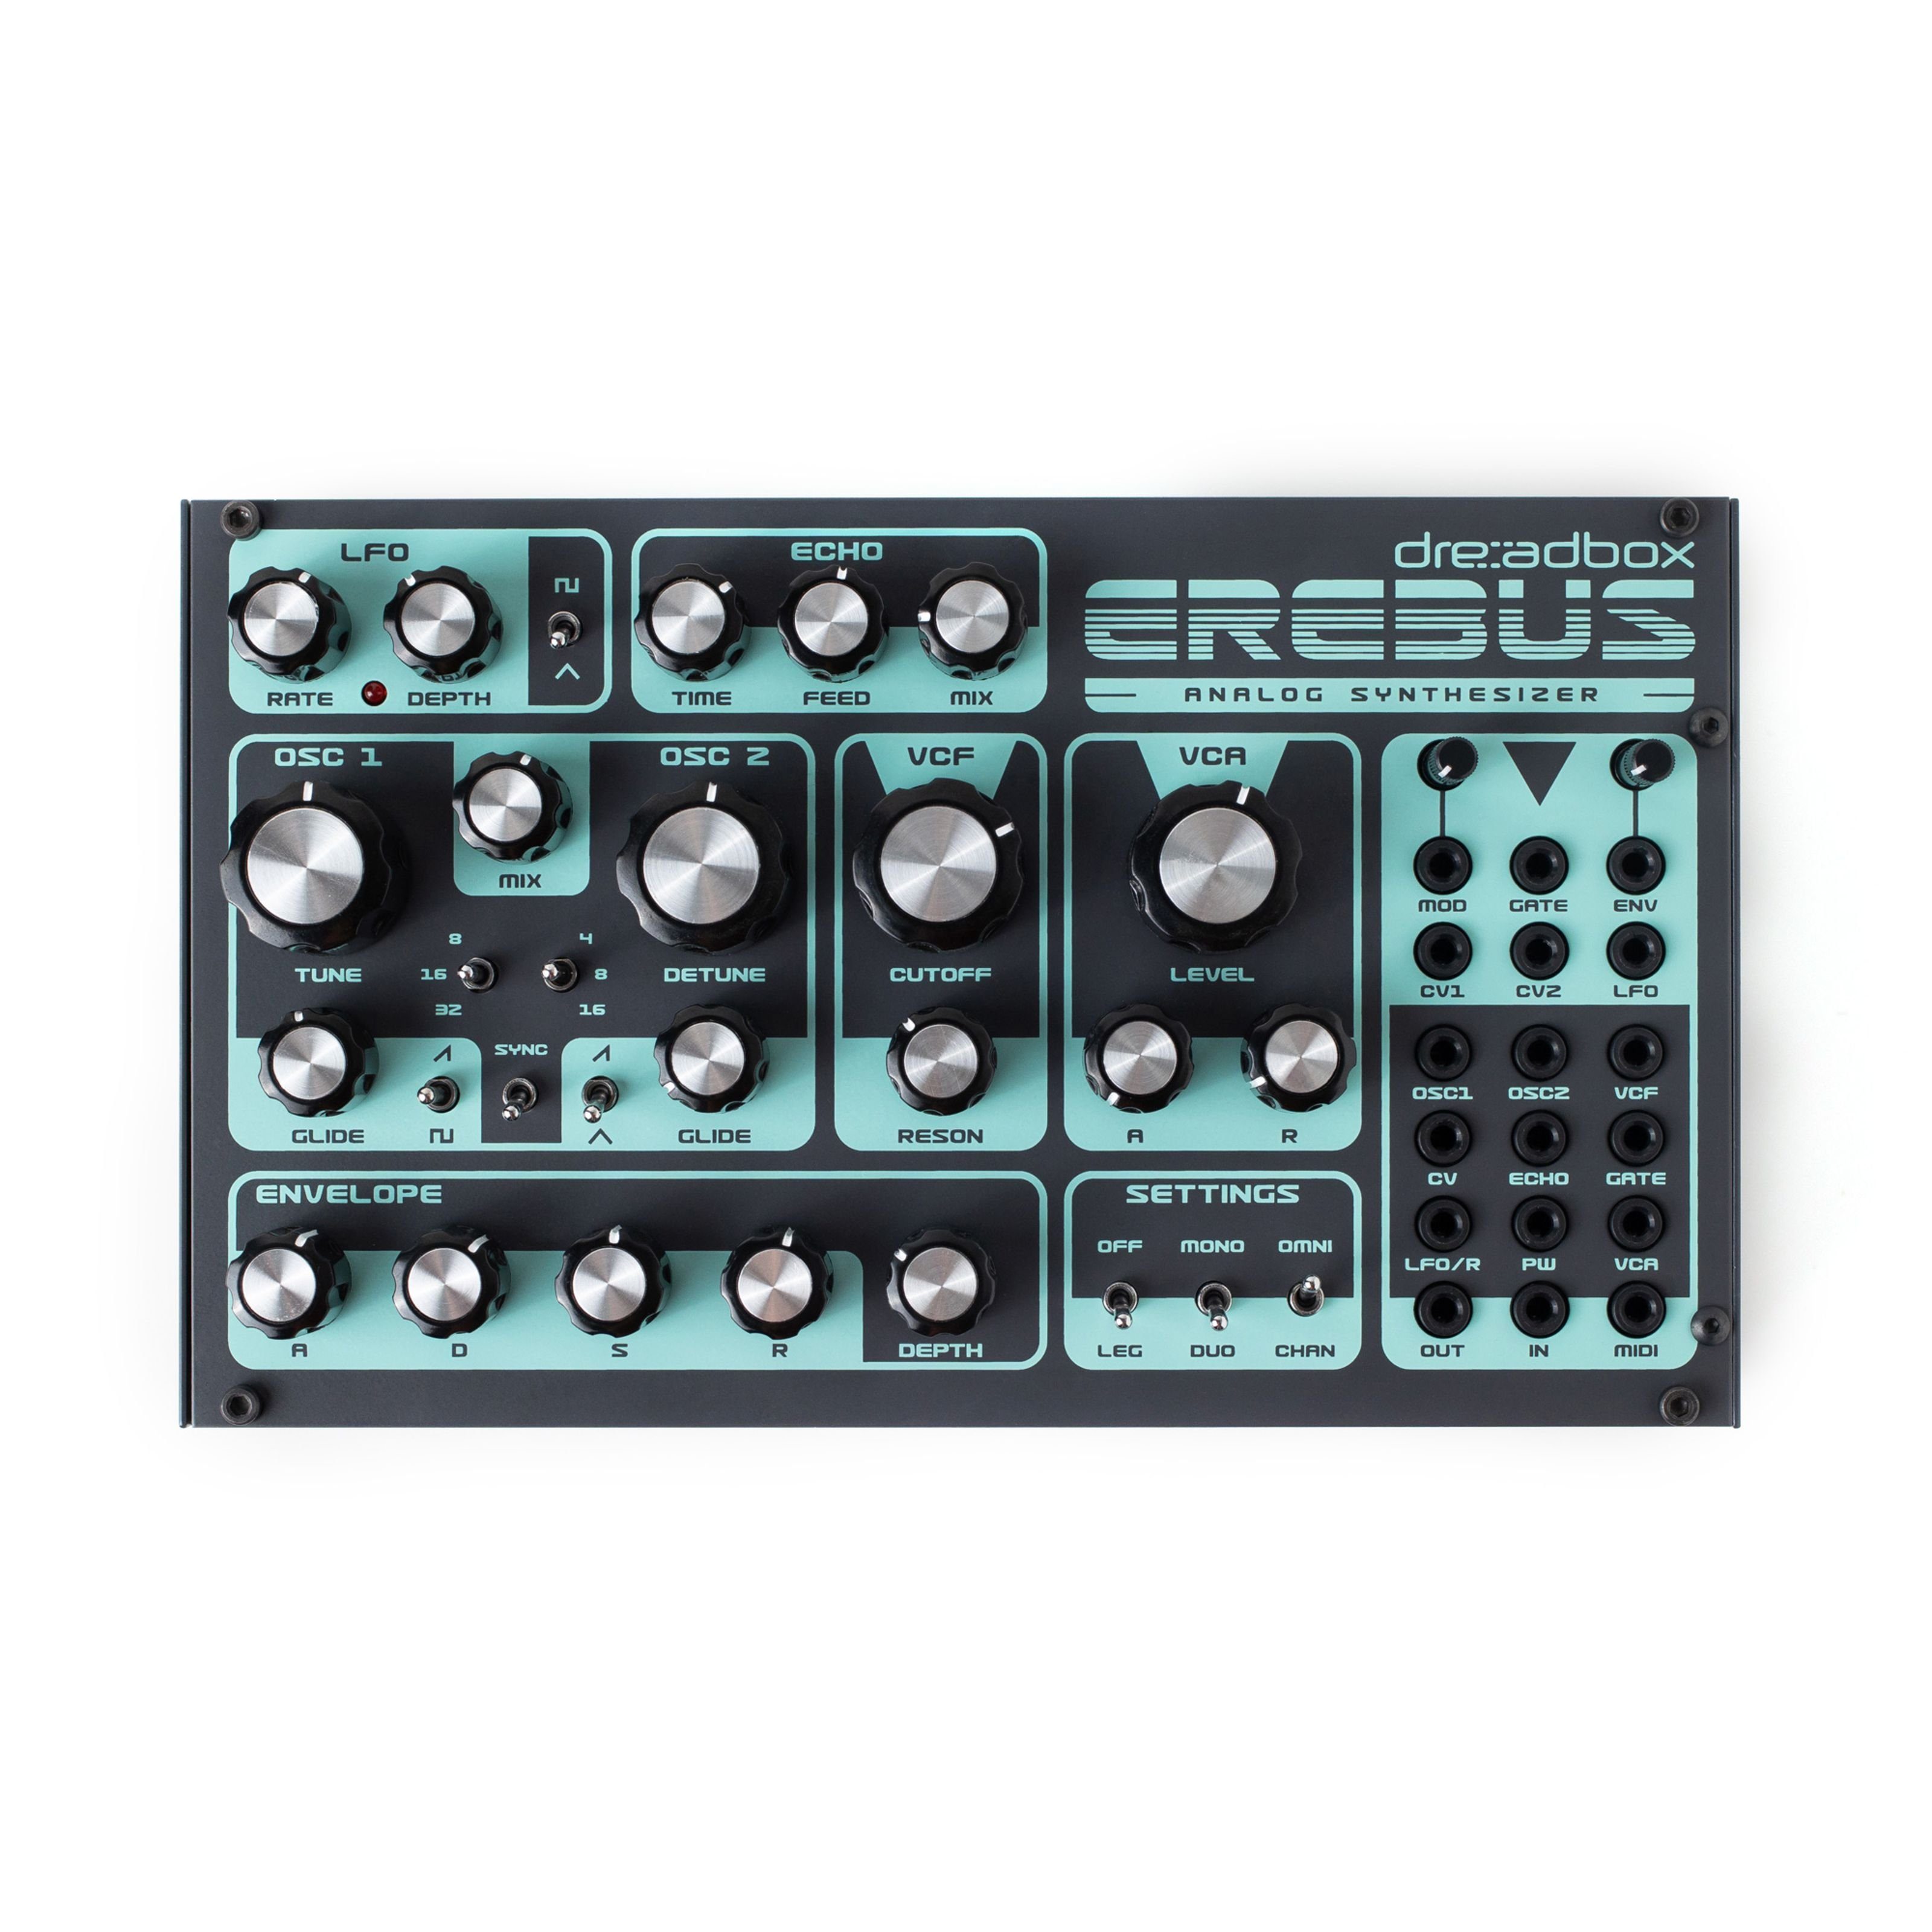 Dreadbox Synthesizer, Erebus Reissue - Analog Synthesizer